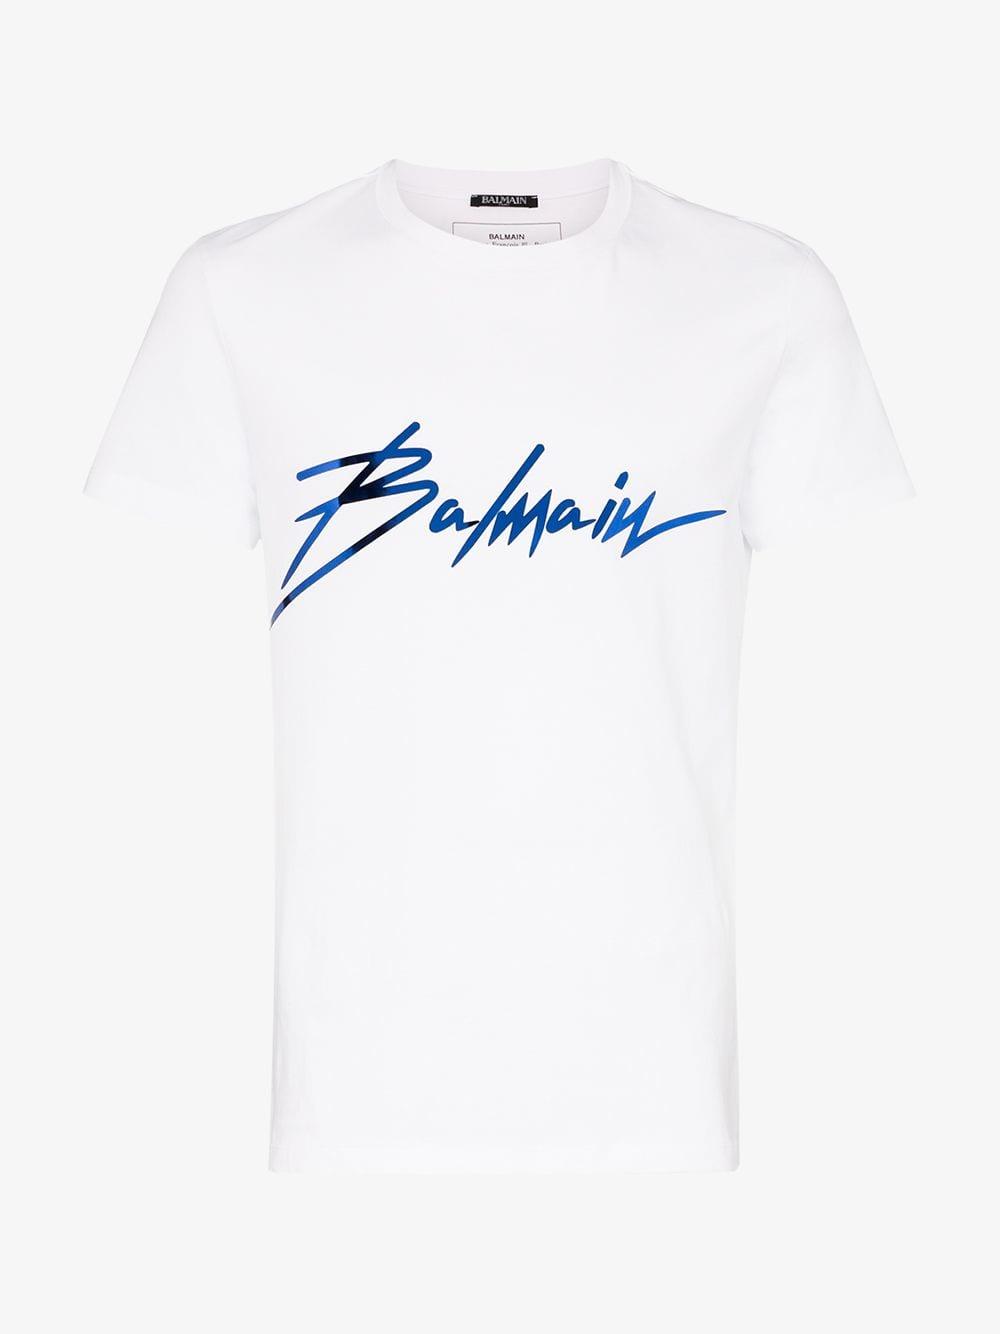 I fare Tid Multiplikation Balmain Metallic Script Logo Cotton T-shirt in White for Men - Lyst